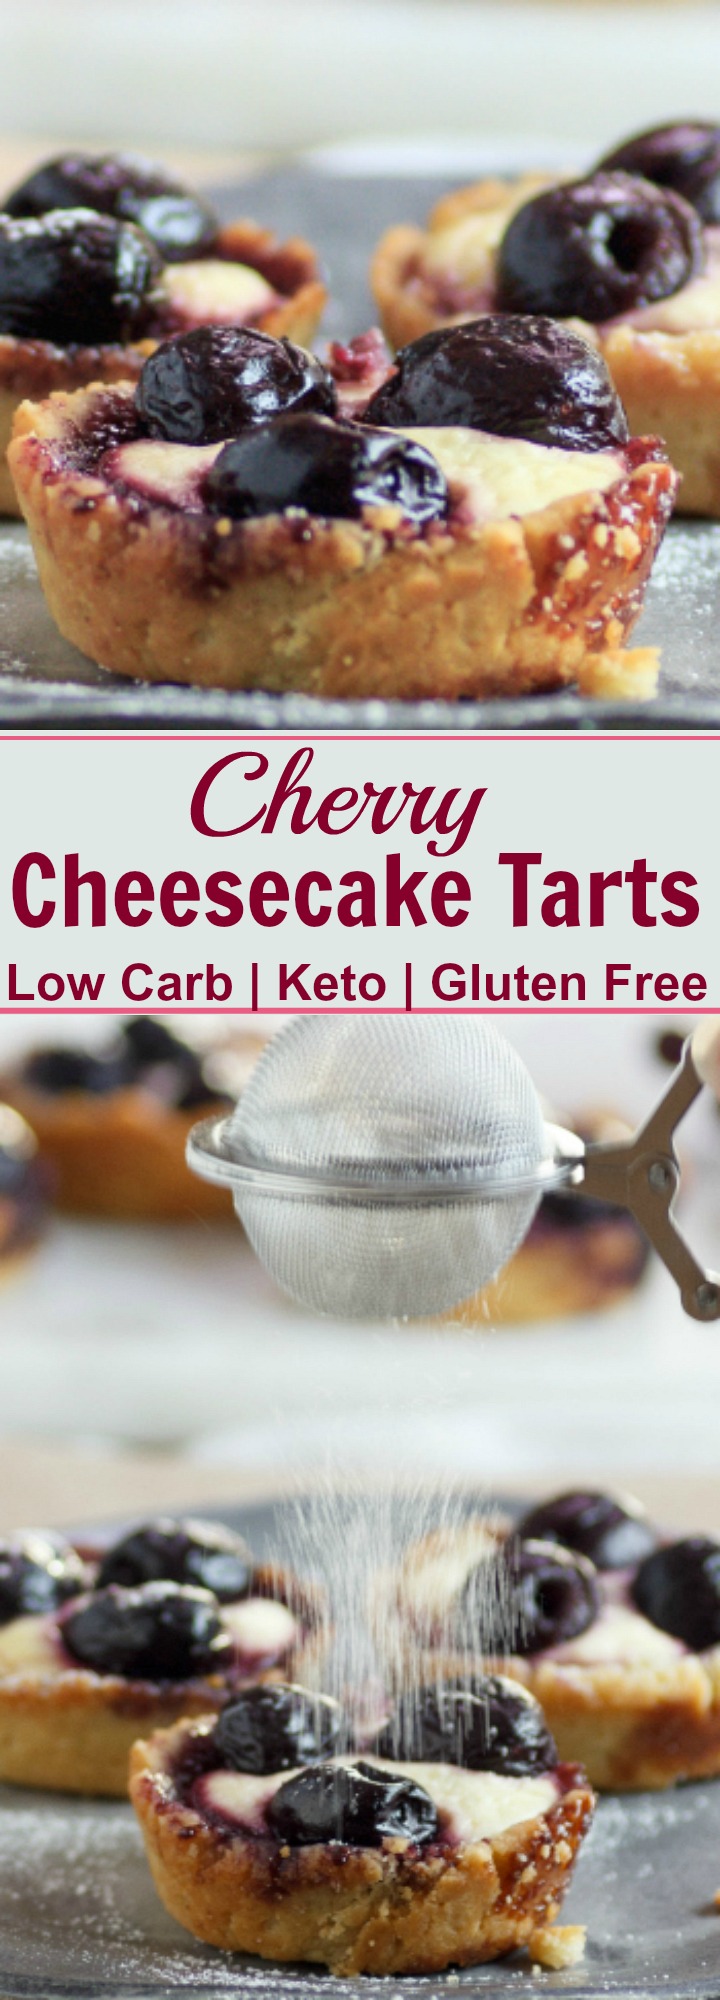 Cherry Cheesecake Tarts Low Carb & Gluten Free